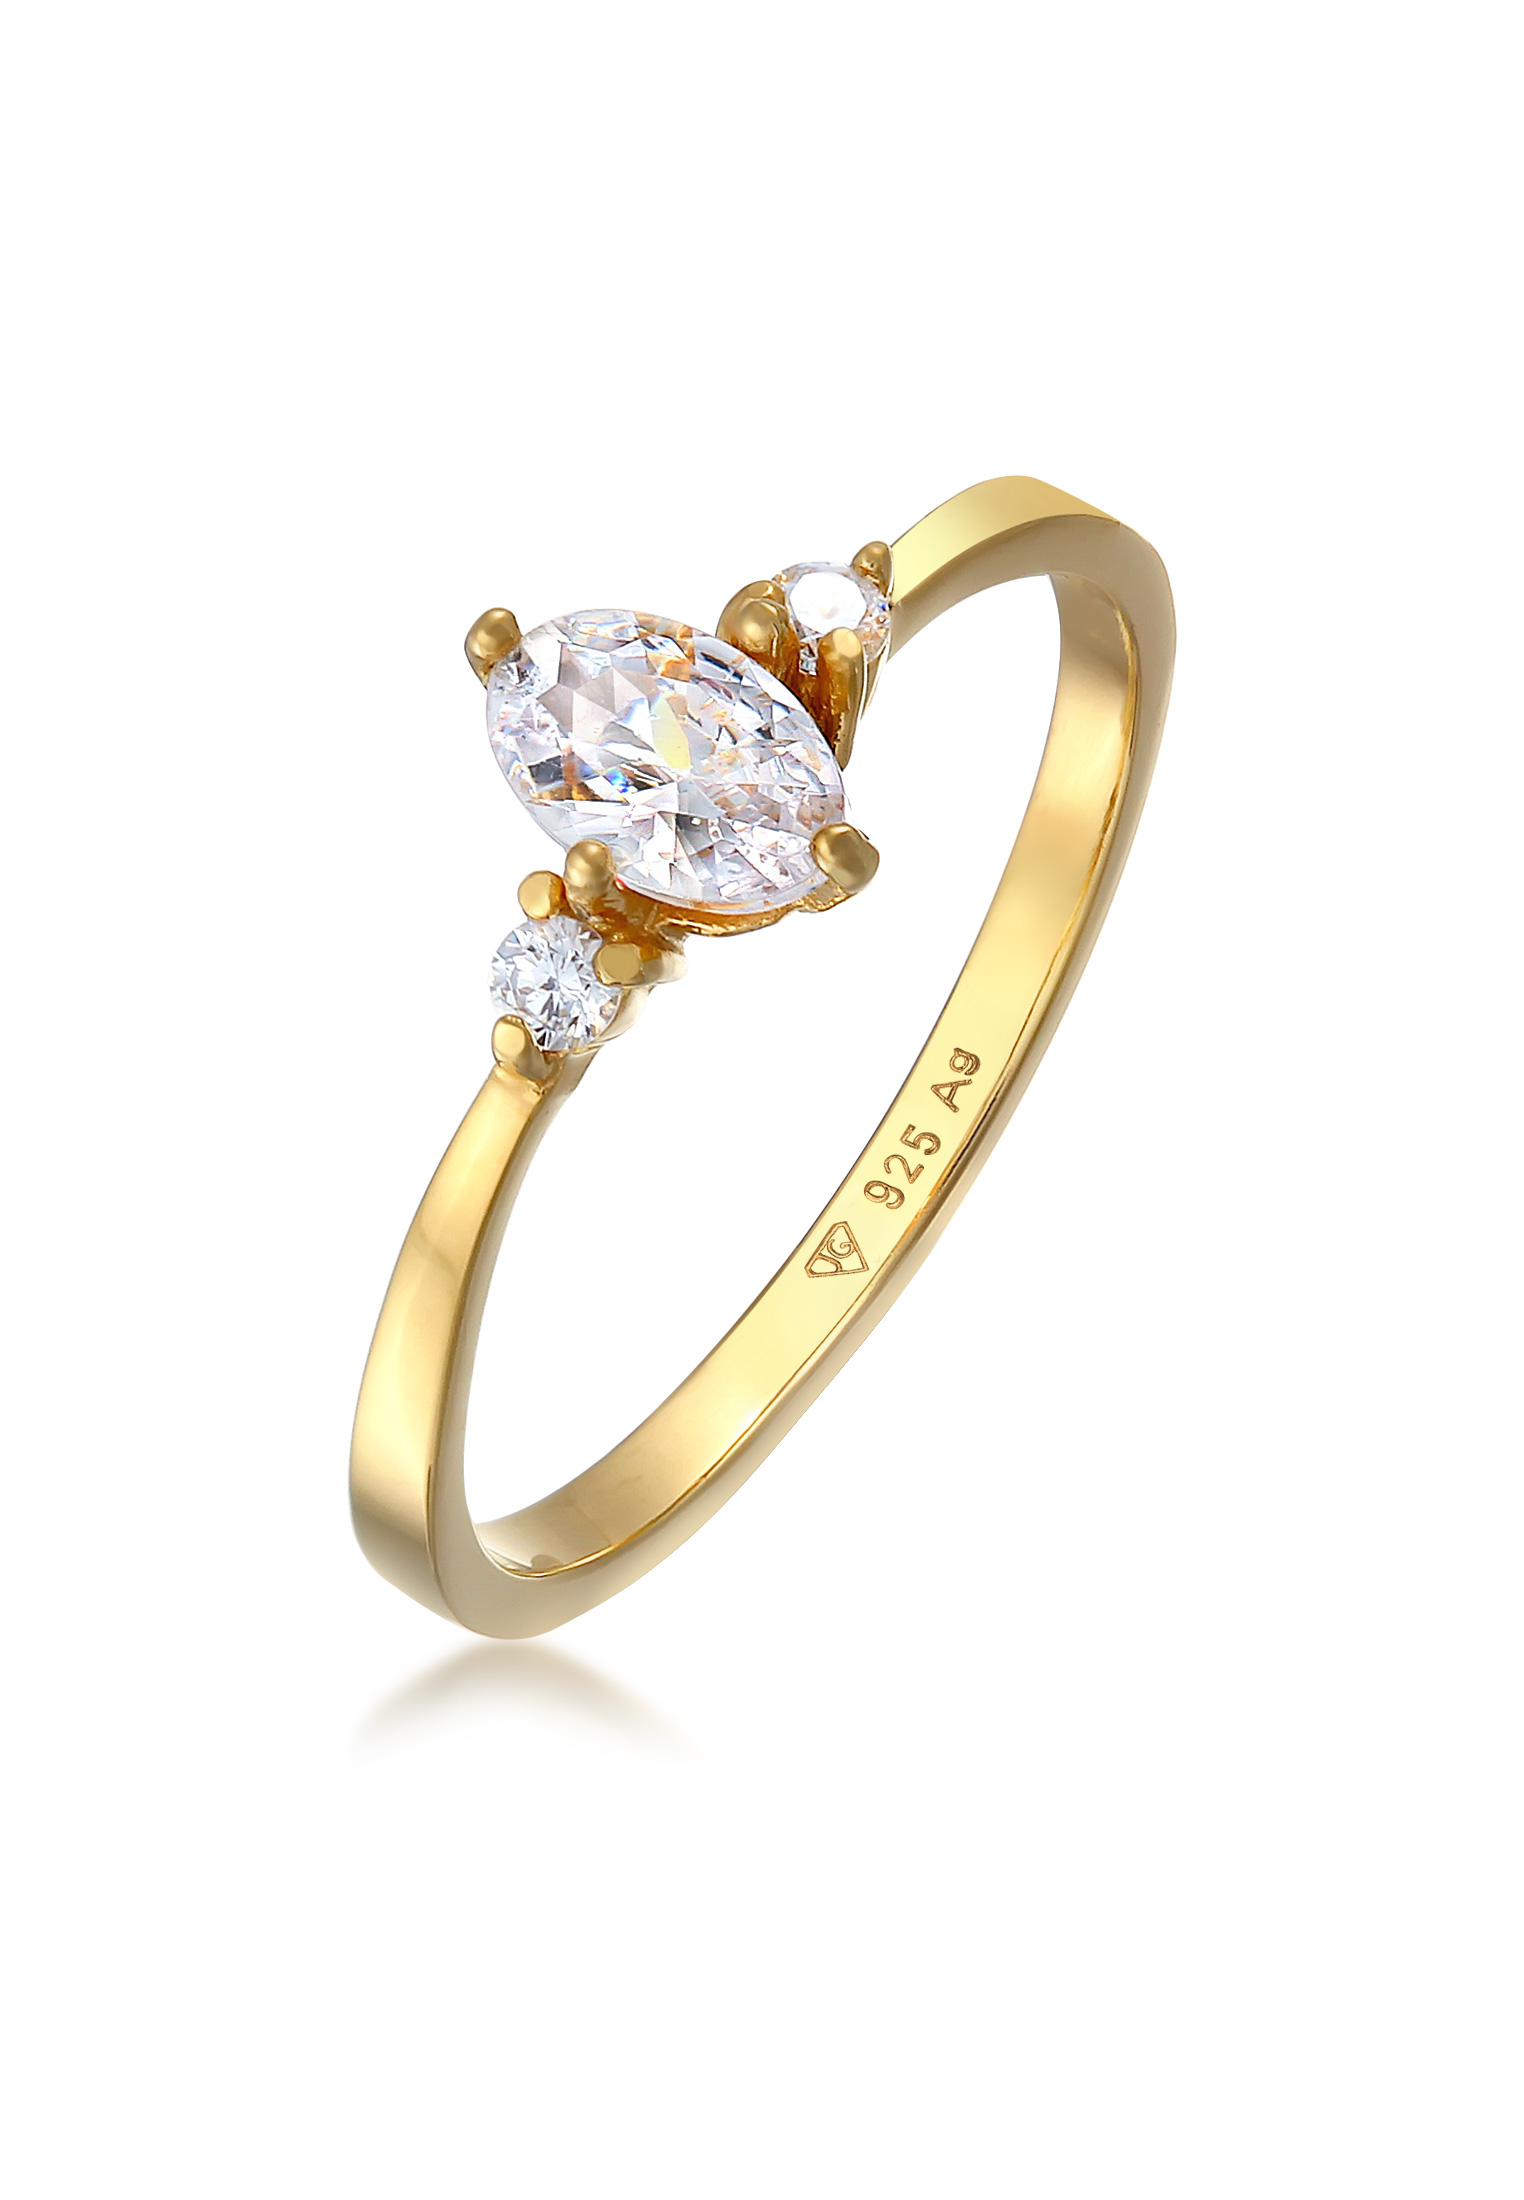 ELLI GERMANY 環訂婚戒指橢圓形鋯石晶體鍍金